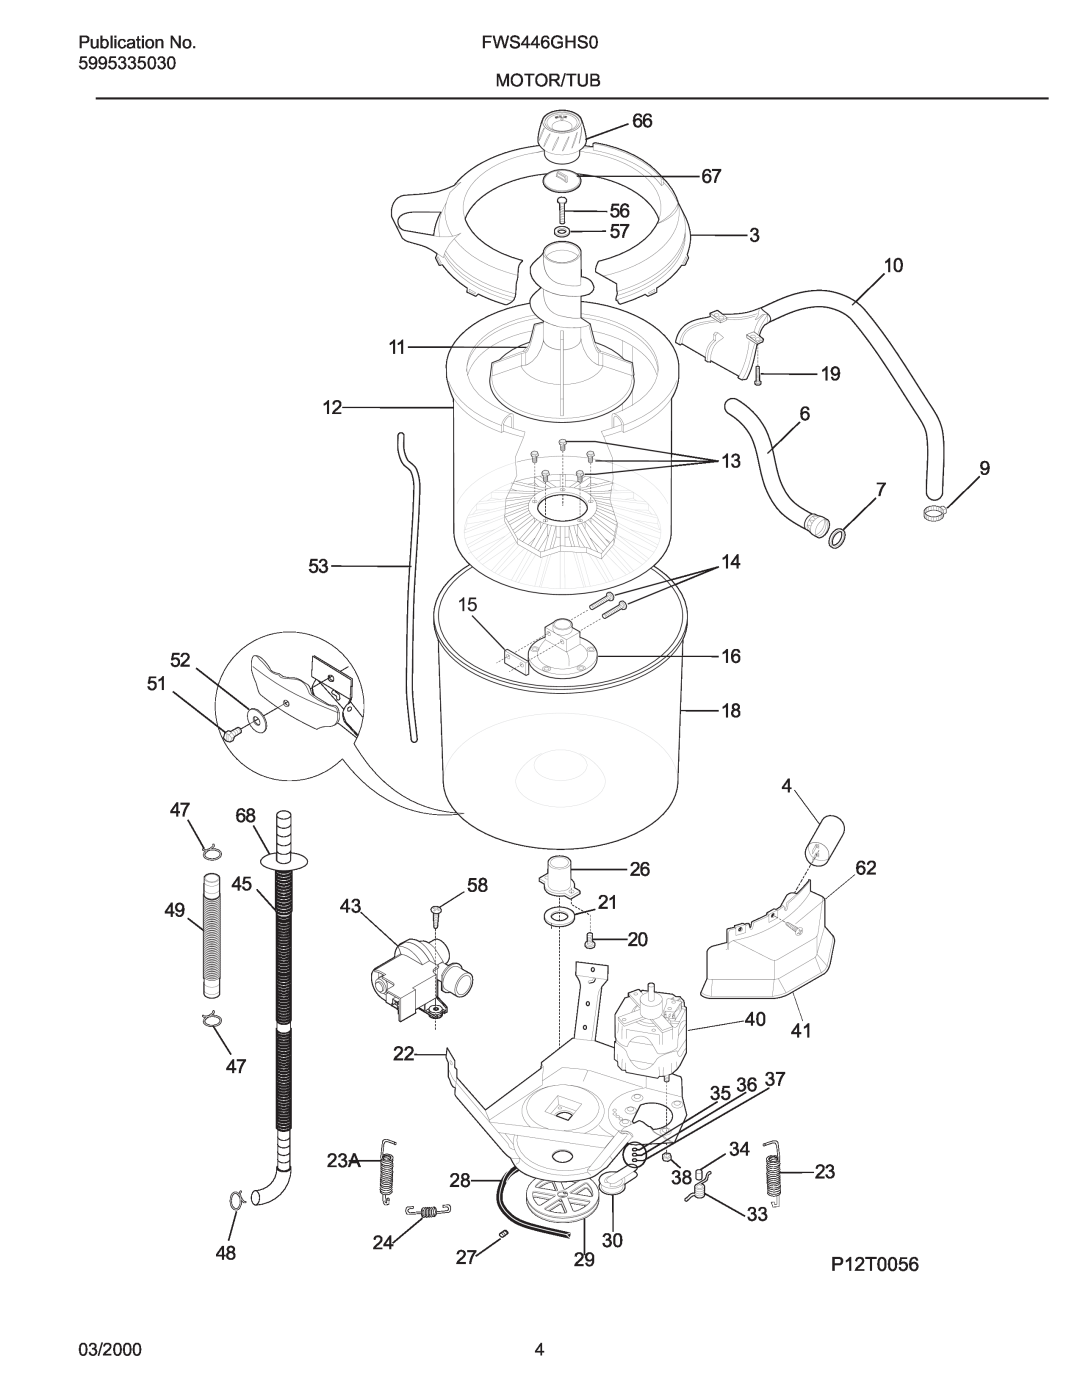 Frigidaire FWS446GHS0 manual Motor/Tub, Publication No, 5995335030, 03/2000 